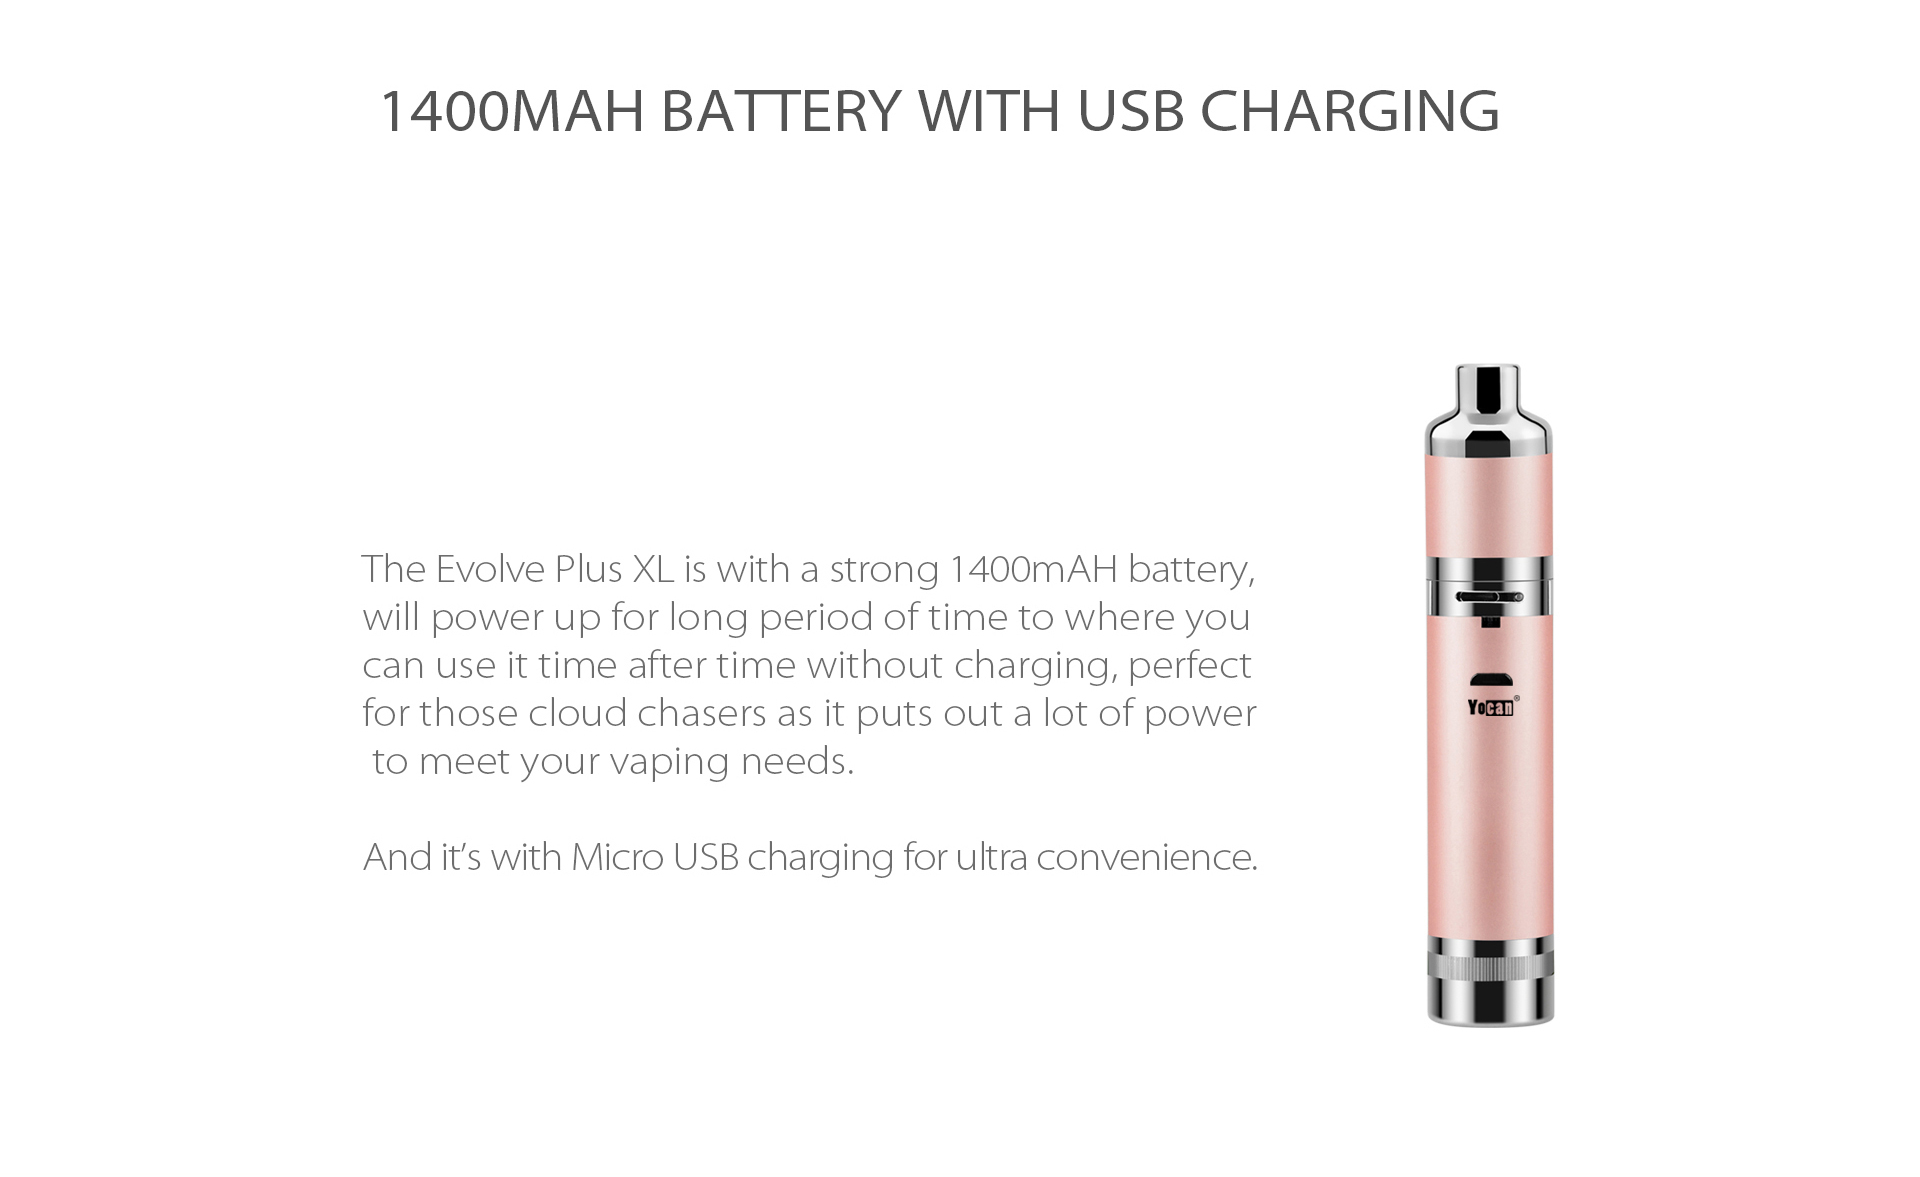 Yocan Evolve Plus XL Vaporizer 2020 version is a pen-style wax vaporizer with a 1400mAh internal battery.